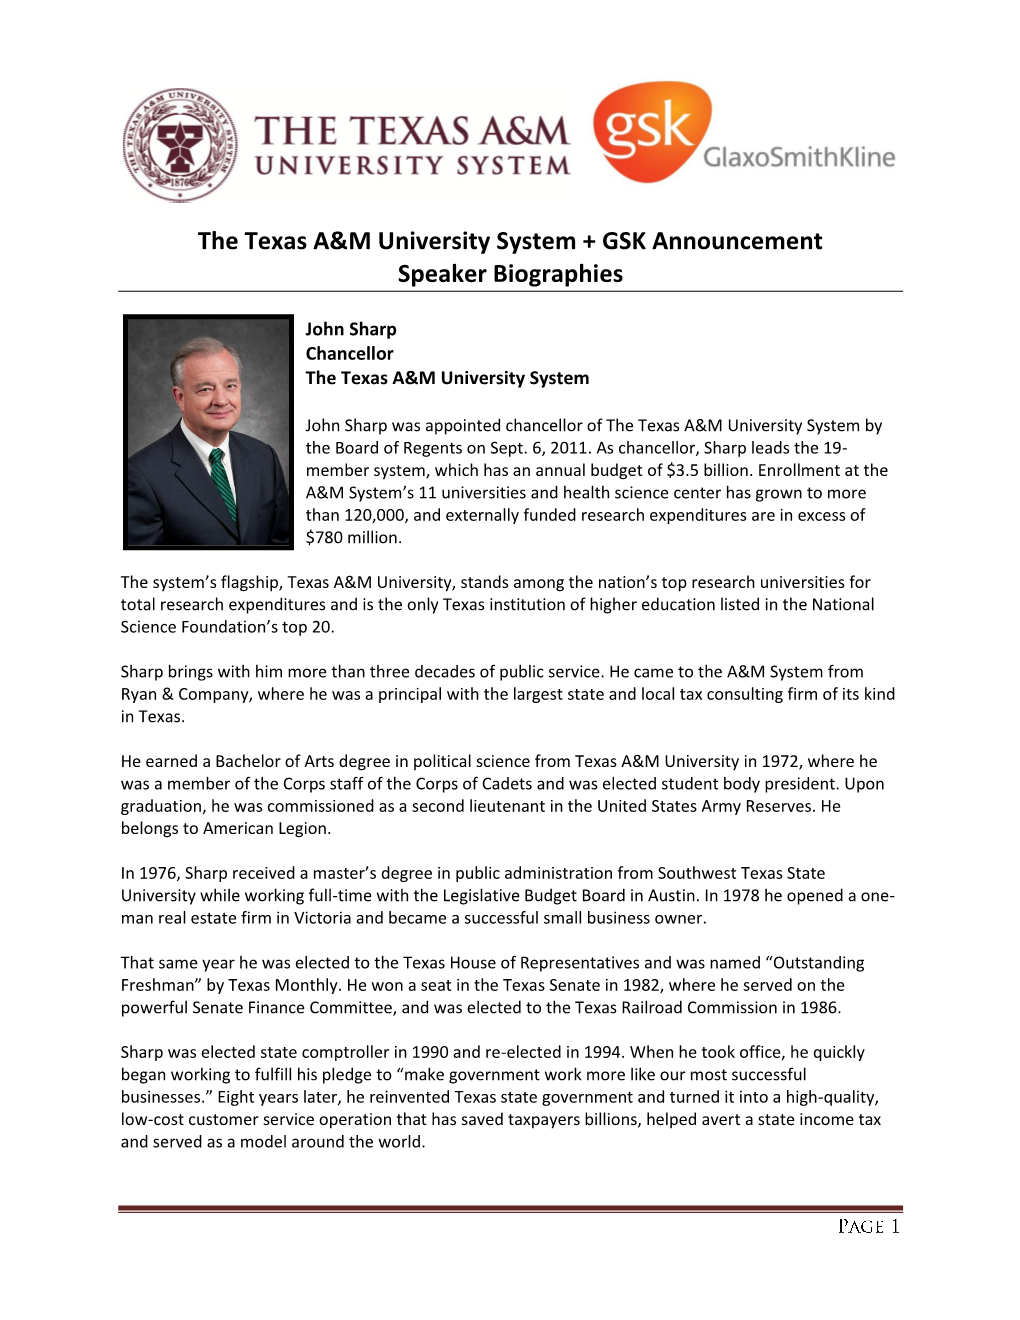 The Texas A&M University System + GSK Announcement Speaker